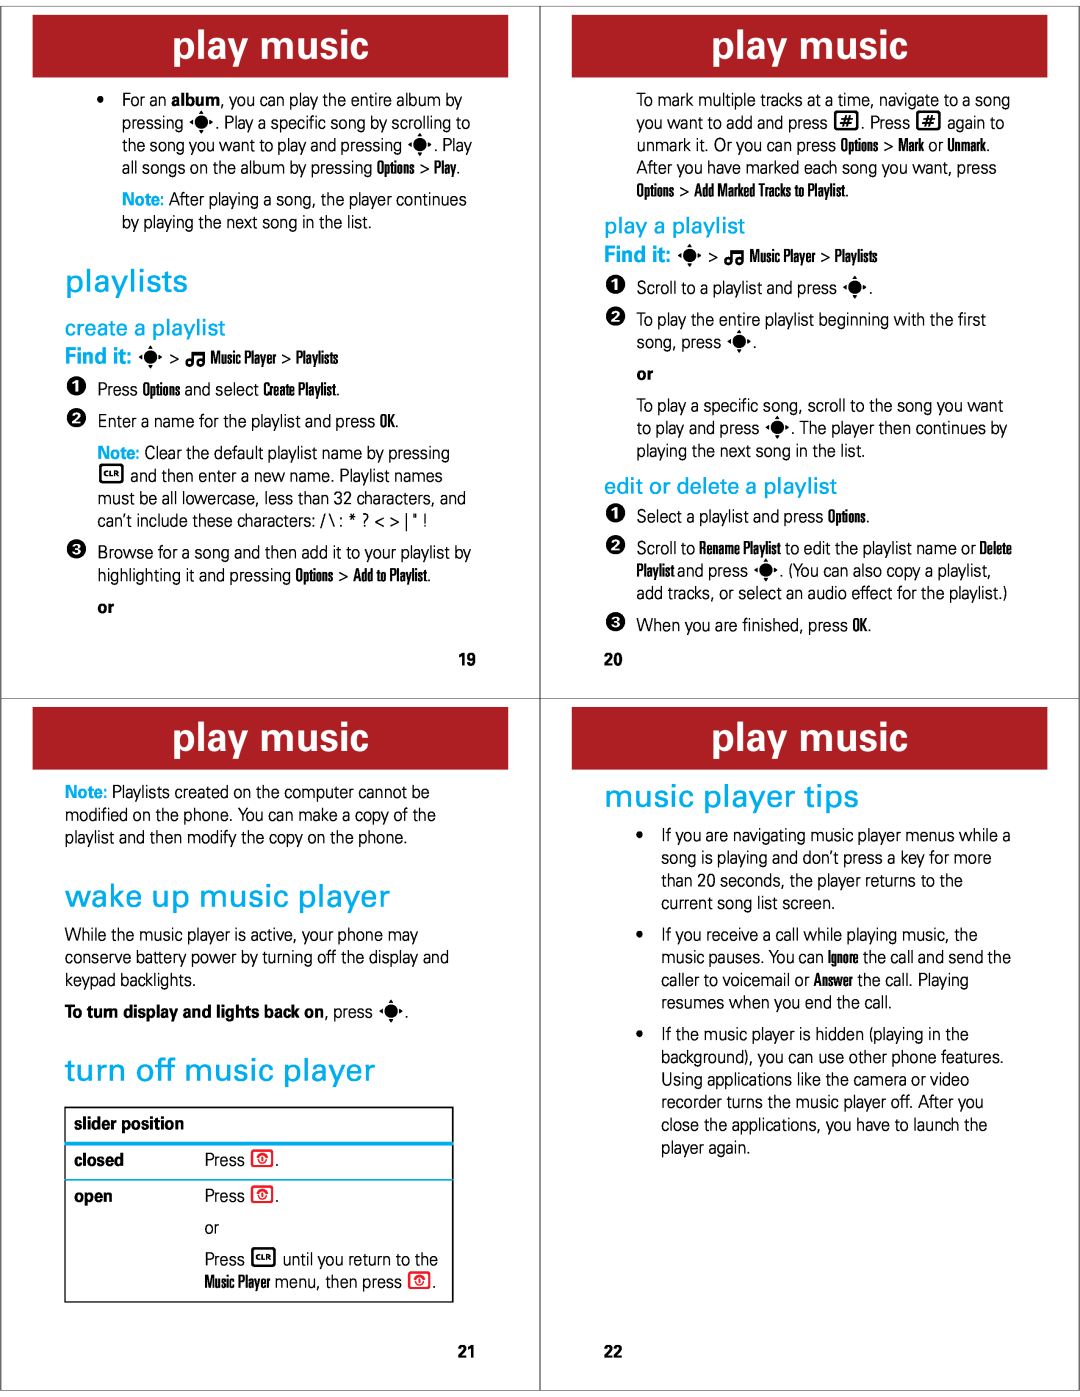 Motorola Z6M playlists, music player tips, wake up music player, turn off music player, play a playlist, create a playlist 